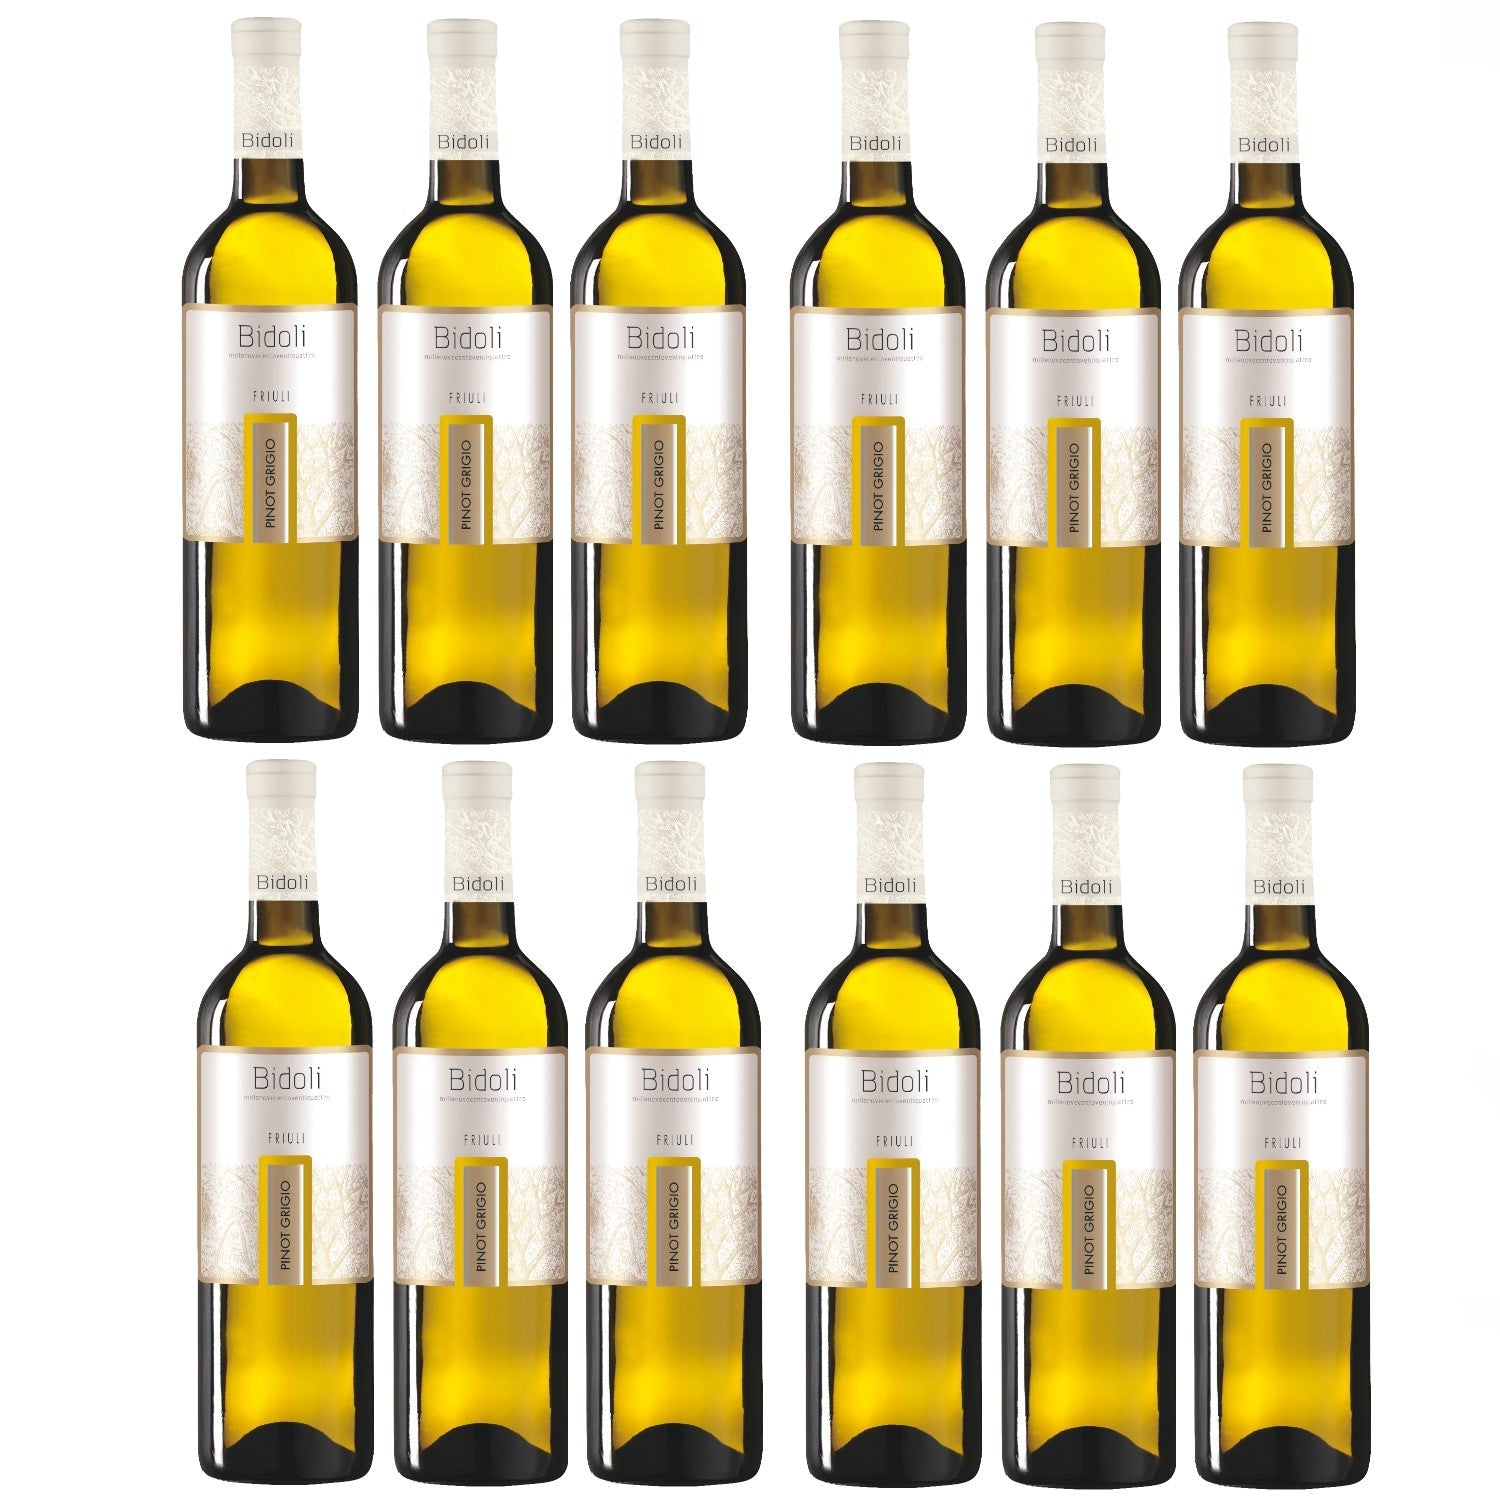 Bidoli Vini Pinot Grigio DOC Friuli Grave Weißwein Wein trocken Italien (12 x 0.75l) - Versanel -